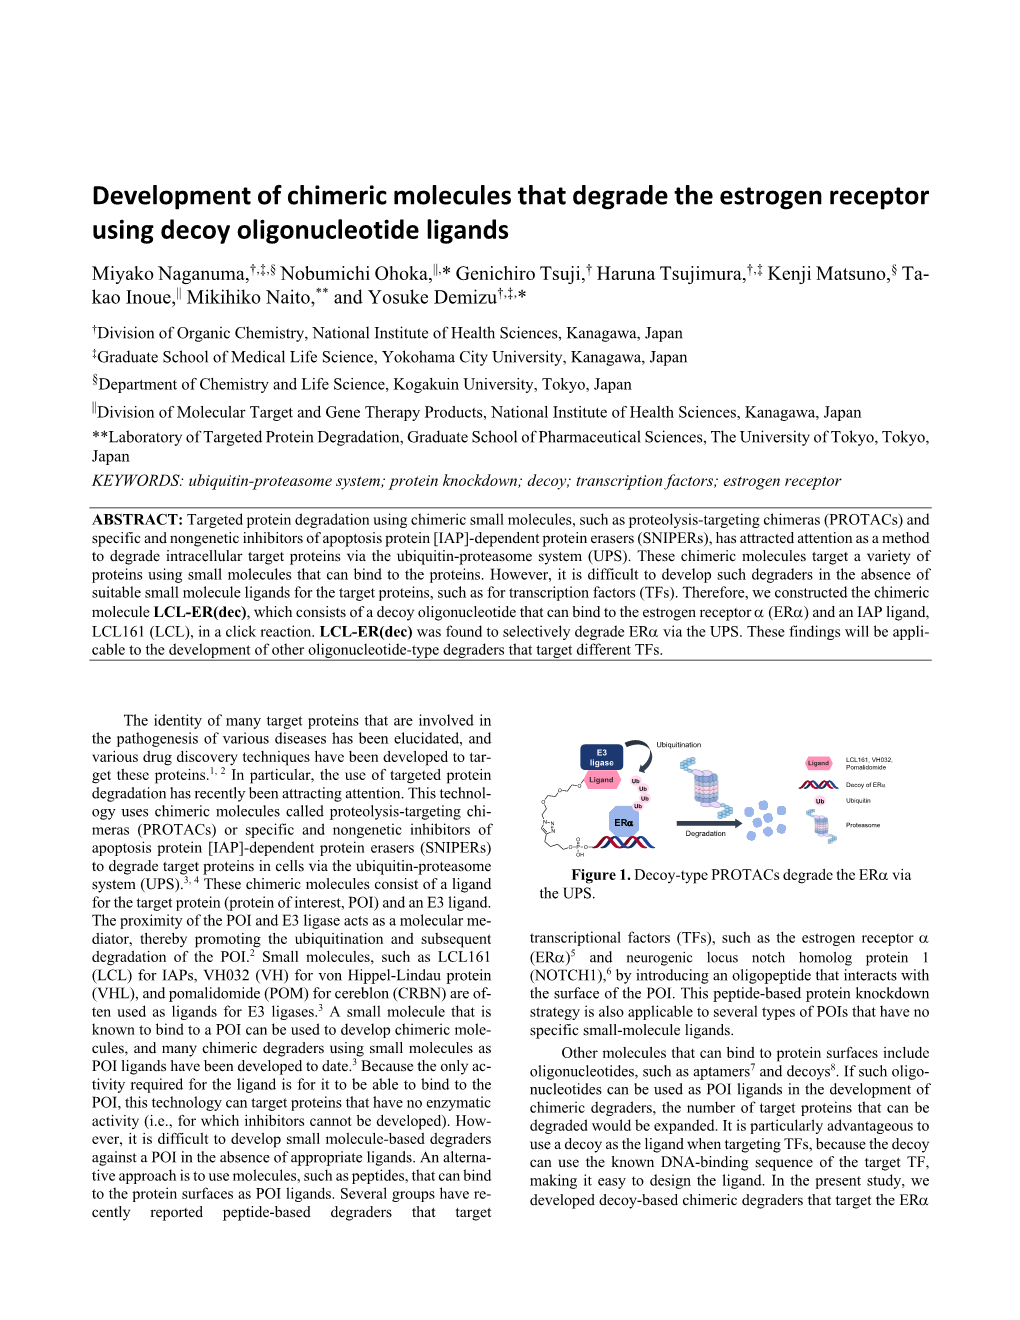 Development of Chimeric Molecules That Degrade the Estrogen Receptor